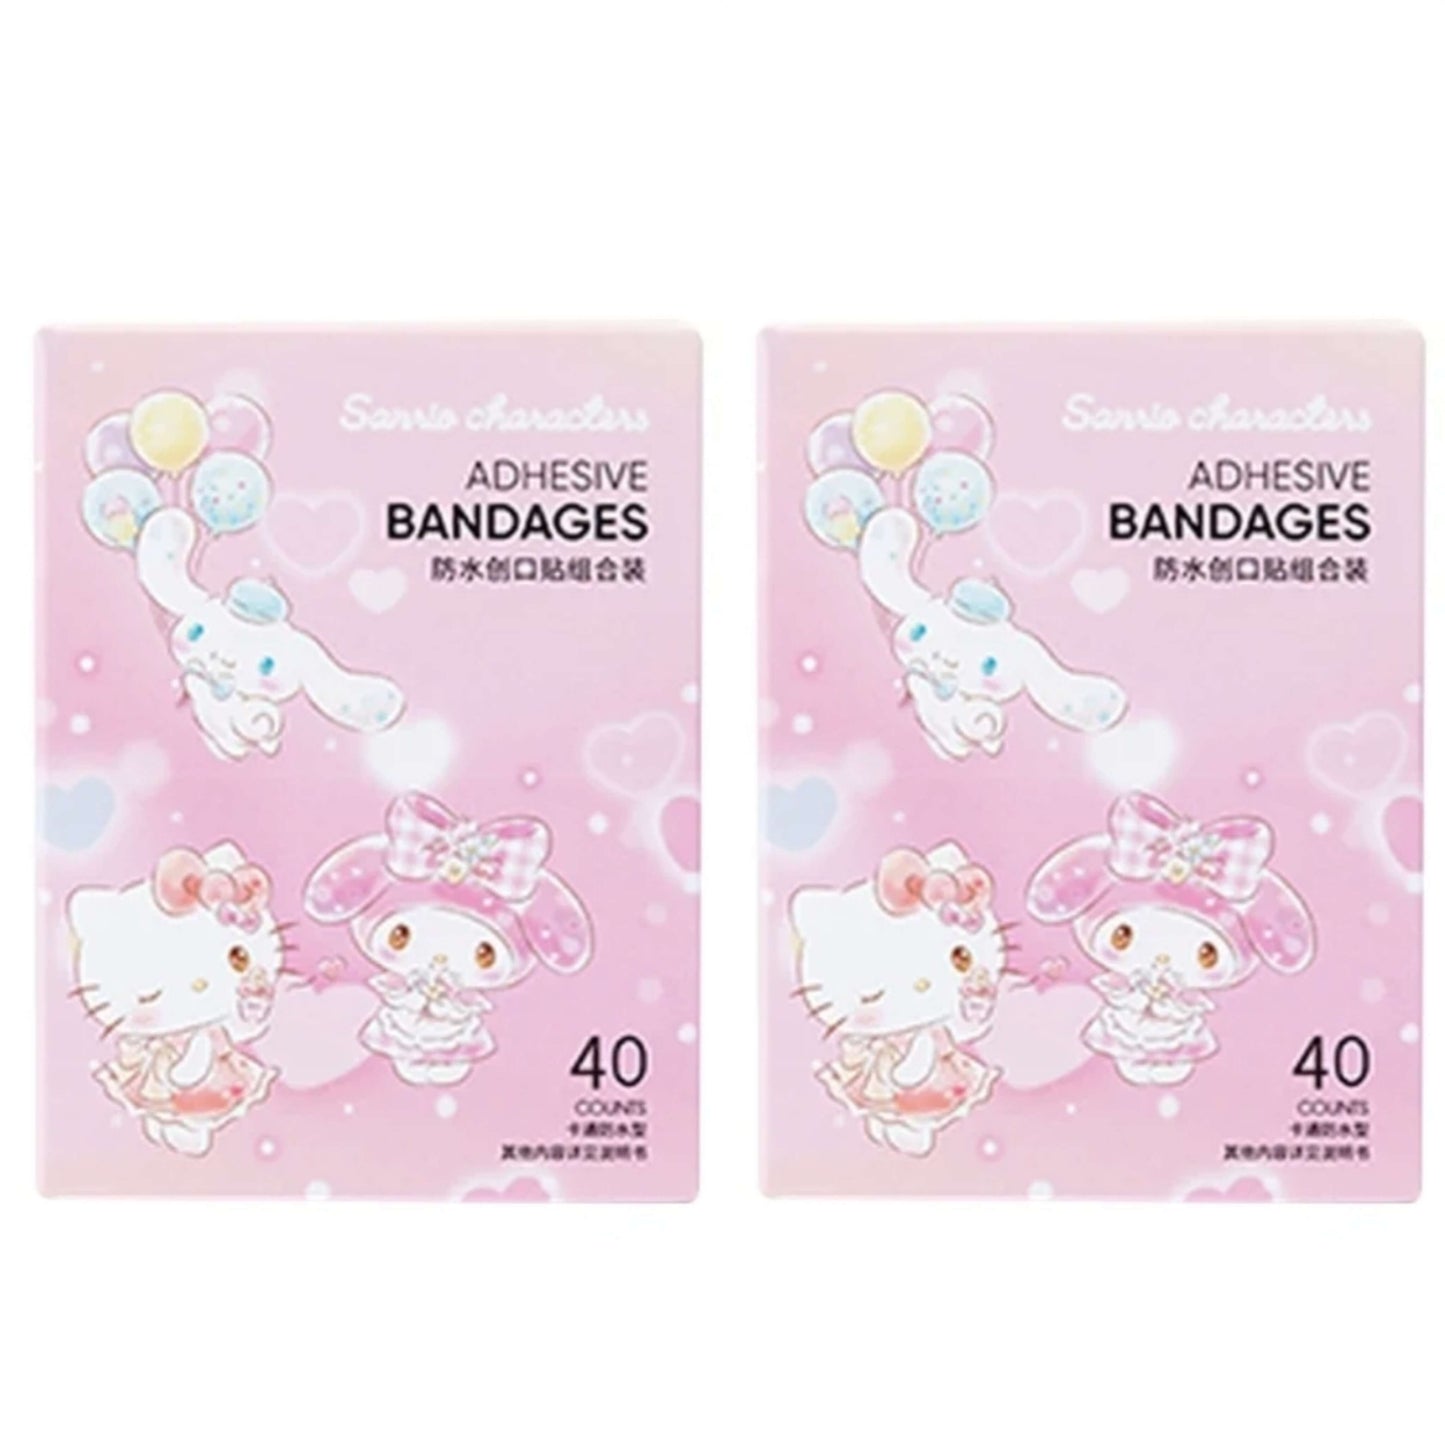 bundle set of 2 pink boxes sanrio adhesive bandages